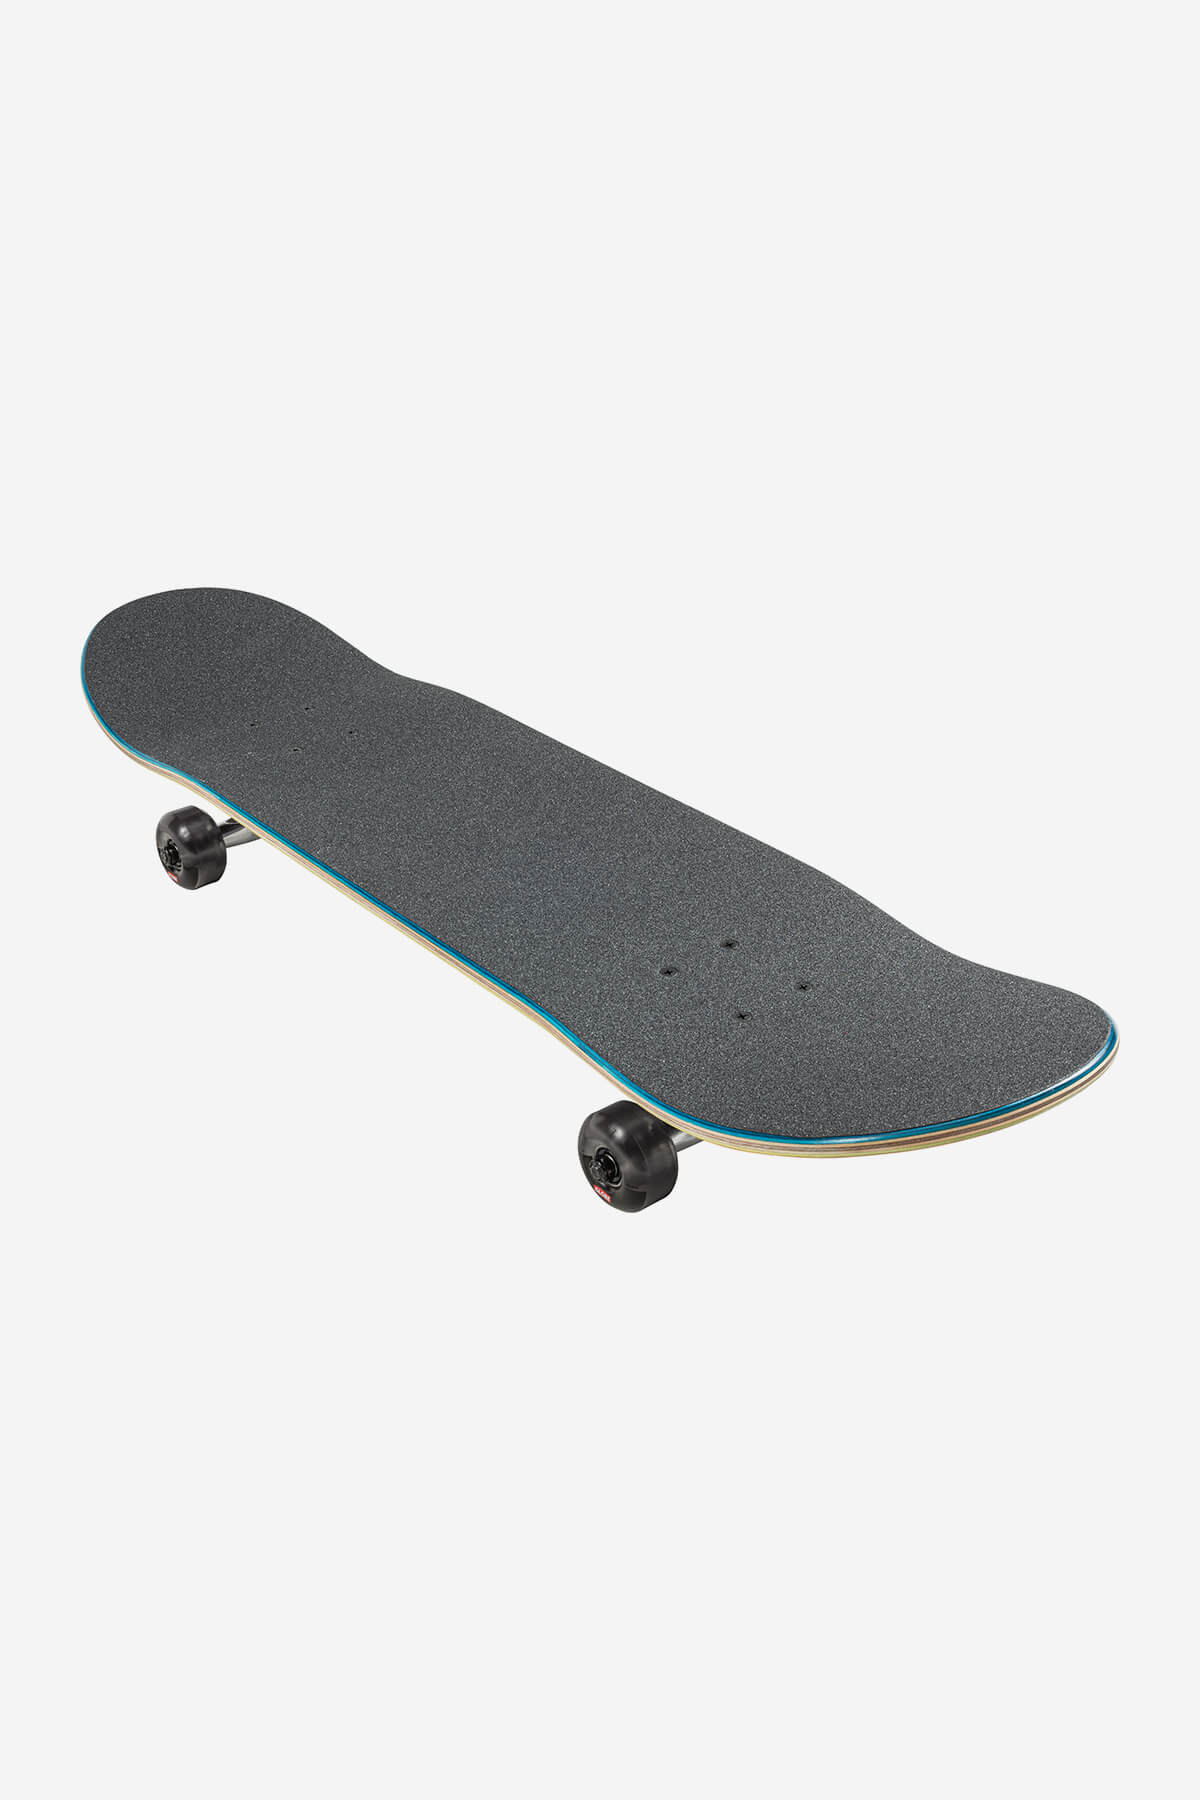 Globe Skateboard completa G1 Ablaze 8.0" Completa Skateboard en Black Dye